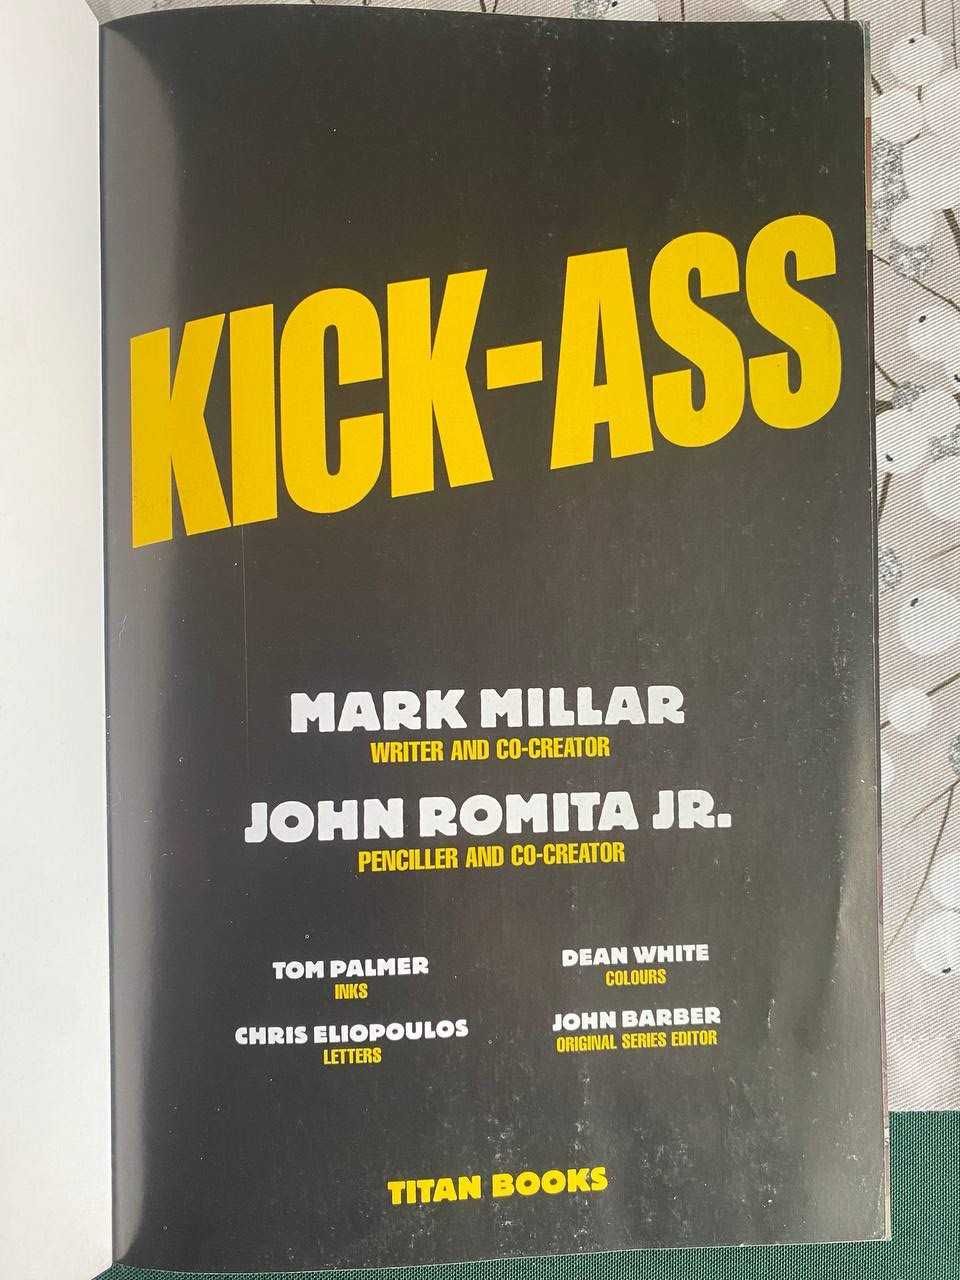 Комикс Kick-Ass (The Graphic Novel)